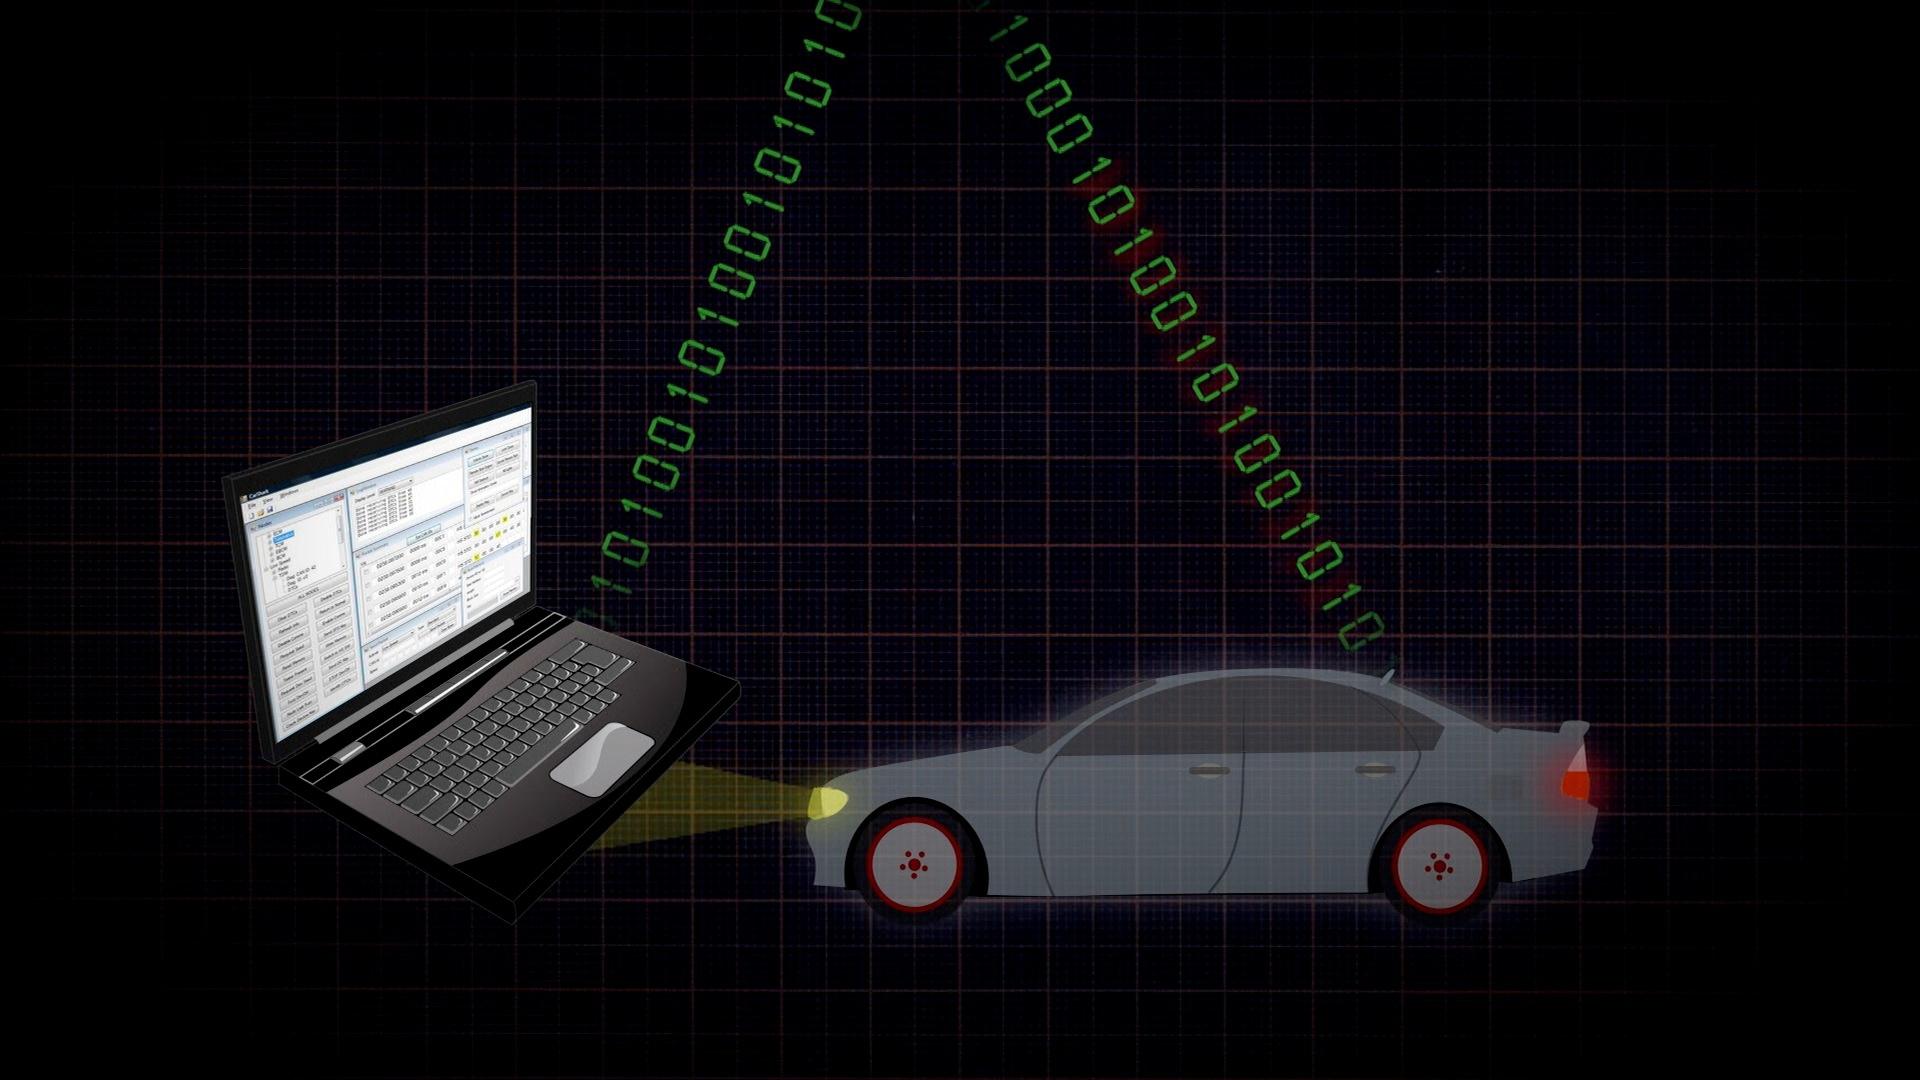 How to hack a car — a quick crash-course